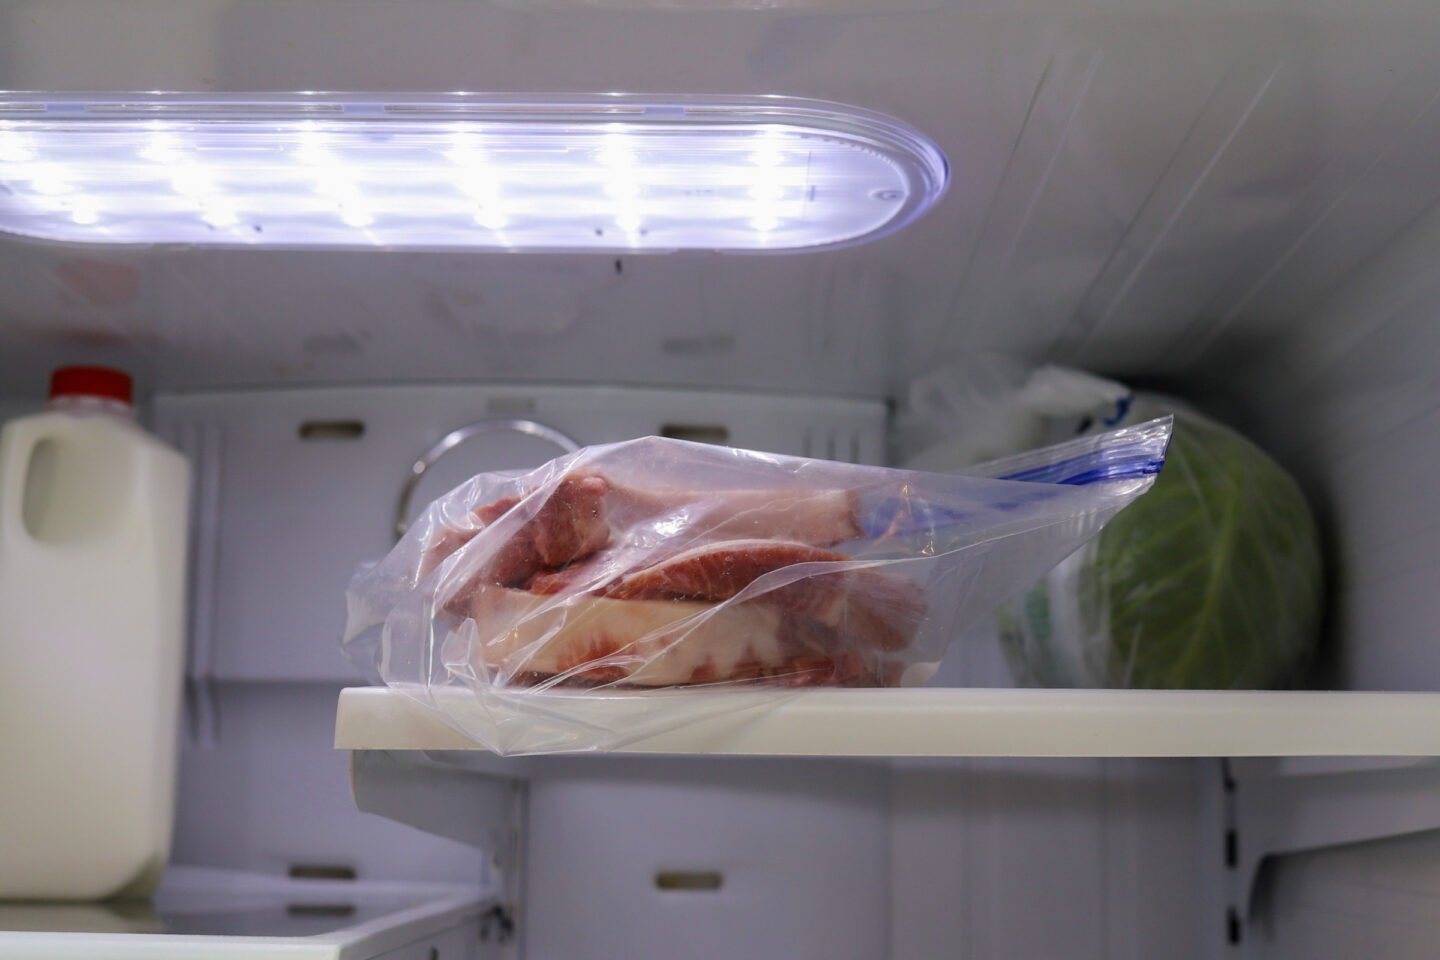 bag of pork chops in the fridge